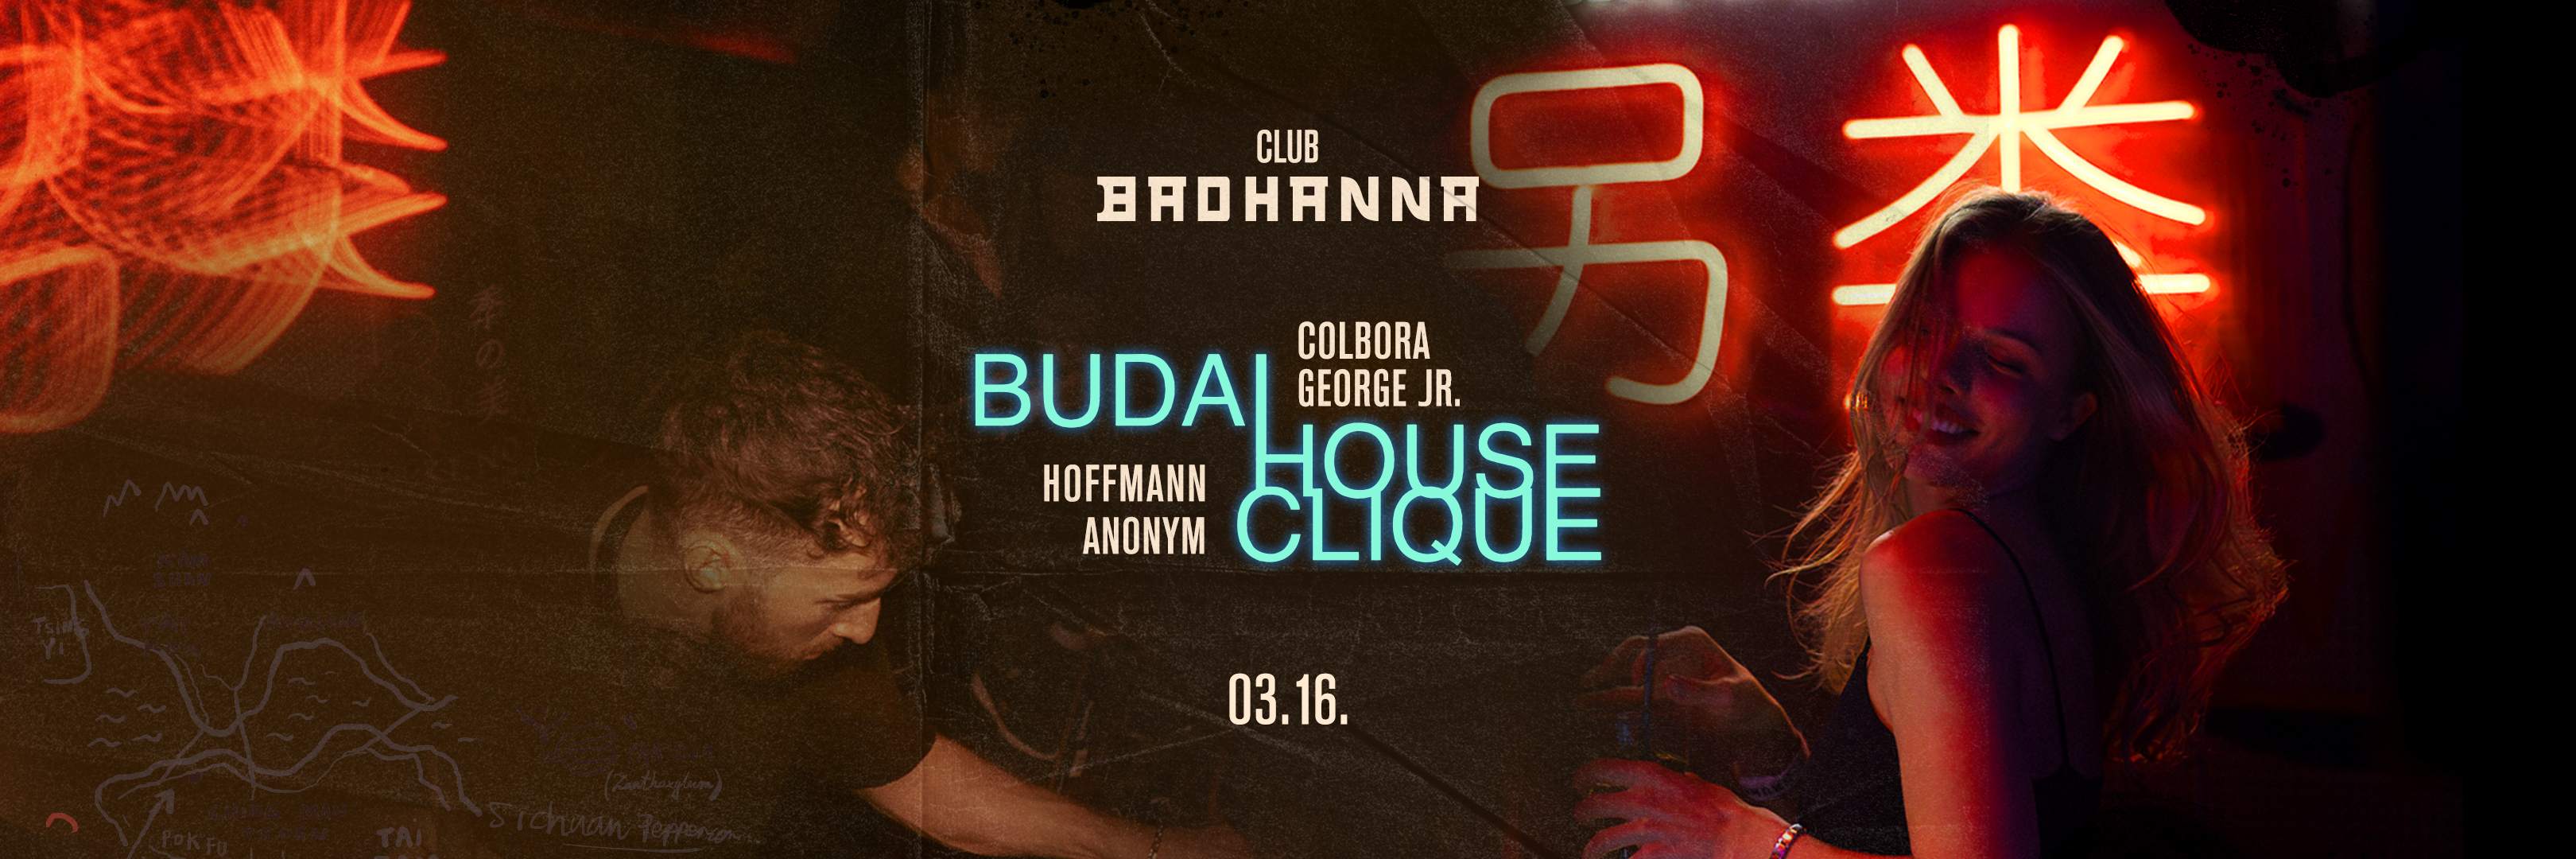 BUDAI HOUSE CLIQUE // BADHANNA Klubnacht // 03.16 - フライヤー表